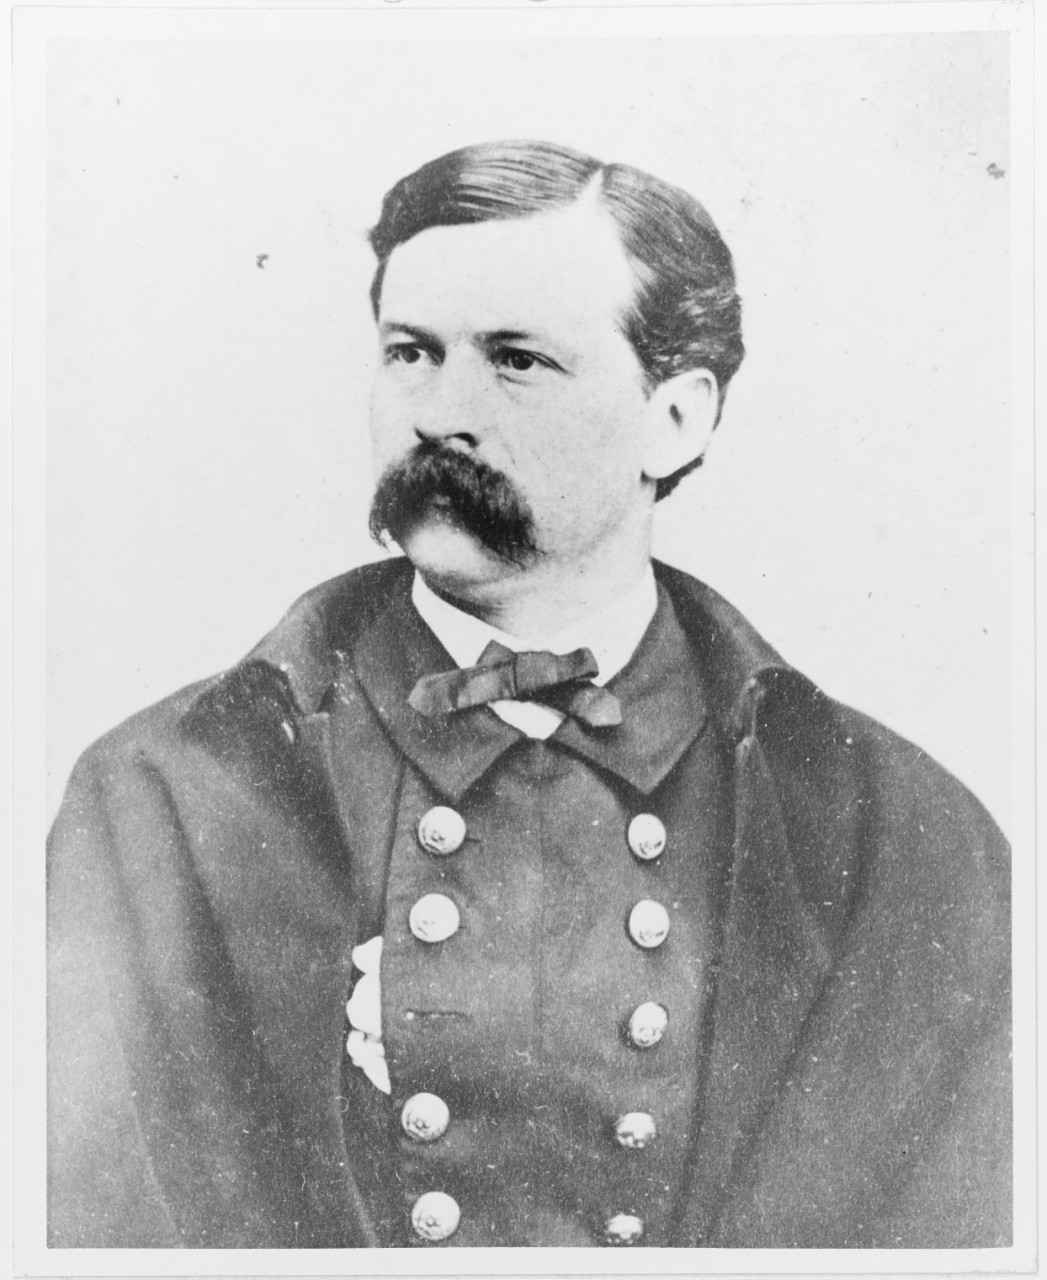 Lieutenant Frederick V. McNair, USN